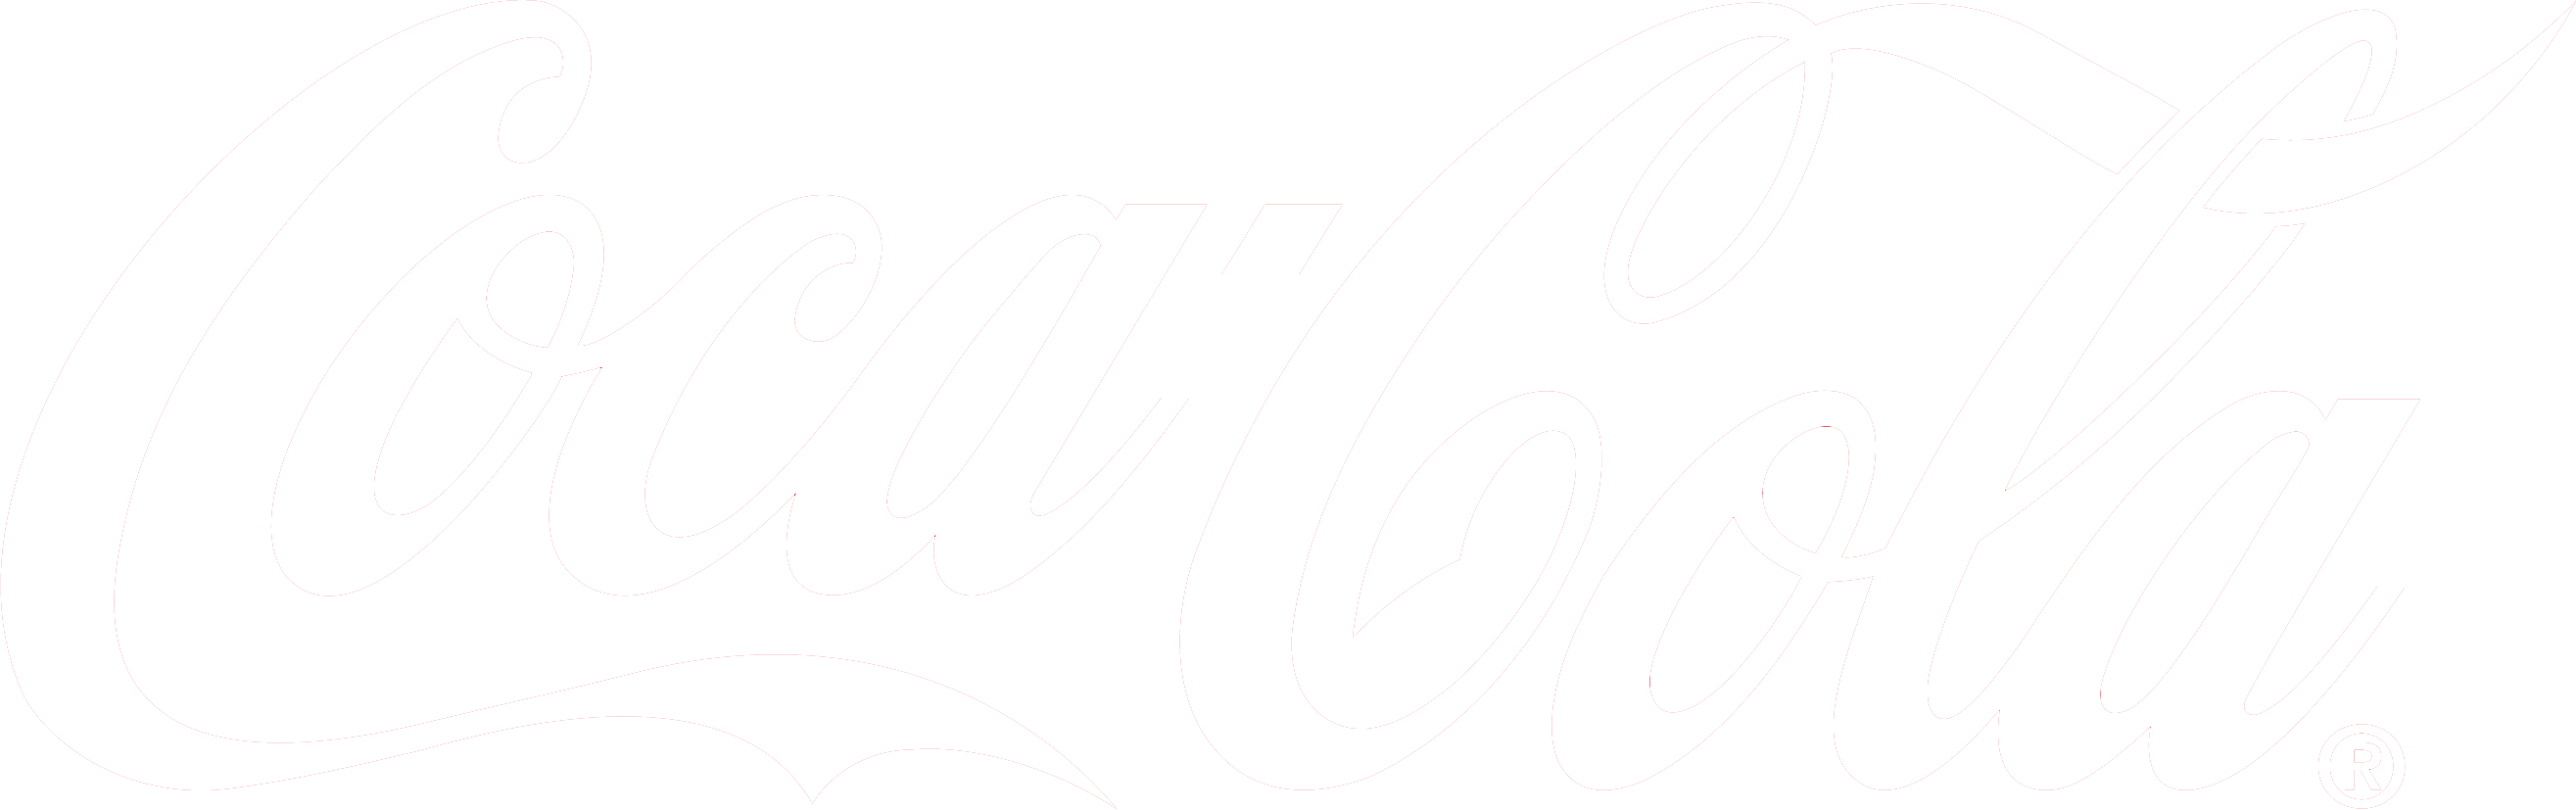 Coca-Cola Zero Logo - Coca cola zero logo png 3 PNG Image